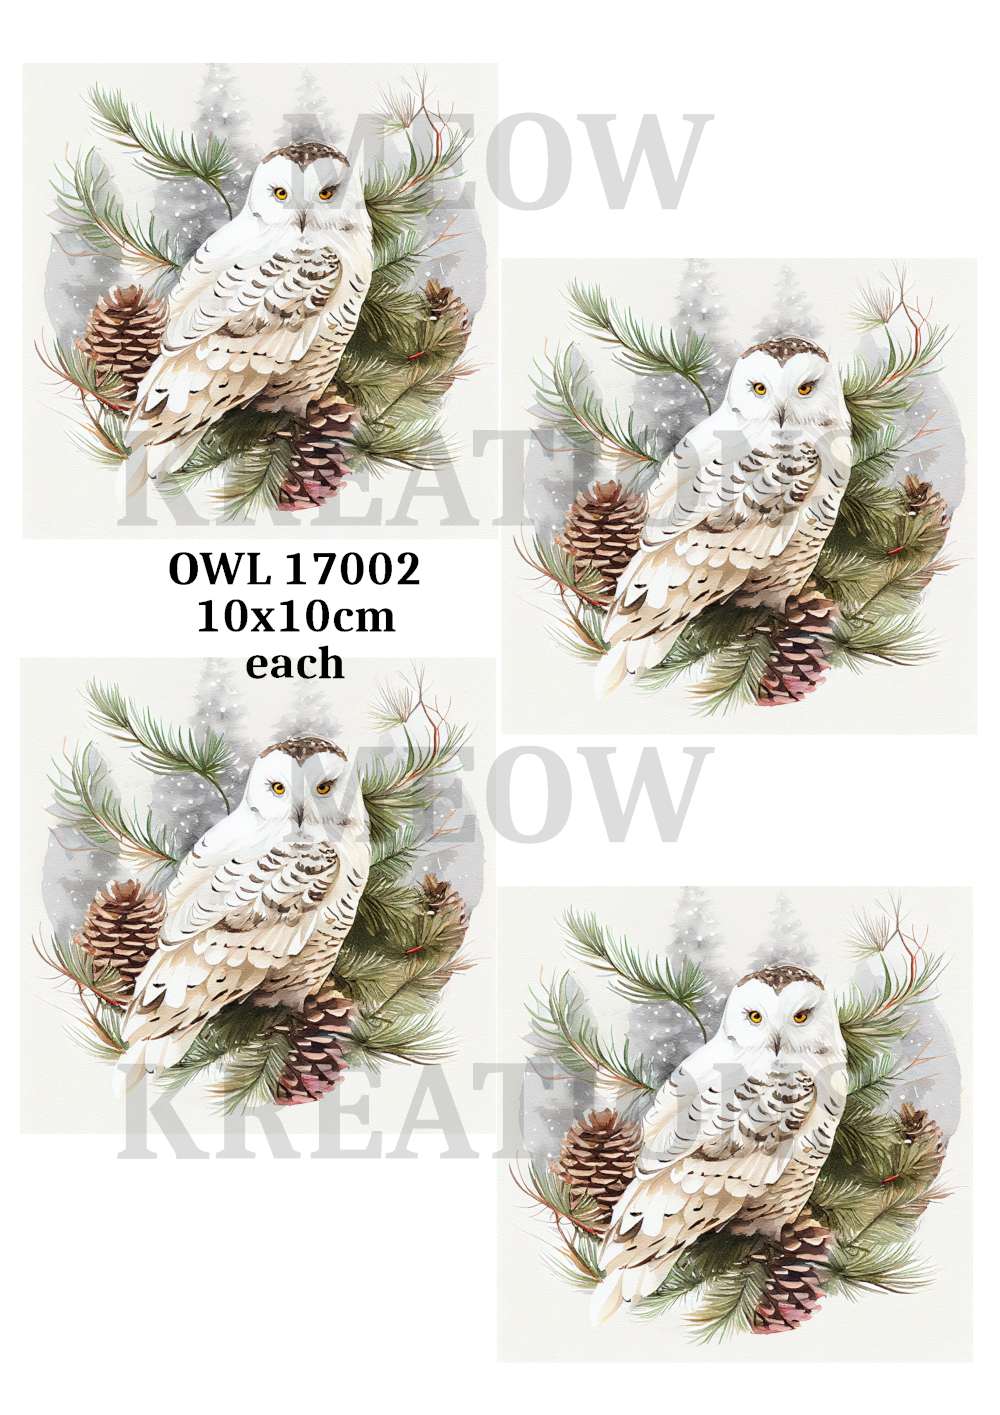 OWL 17002